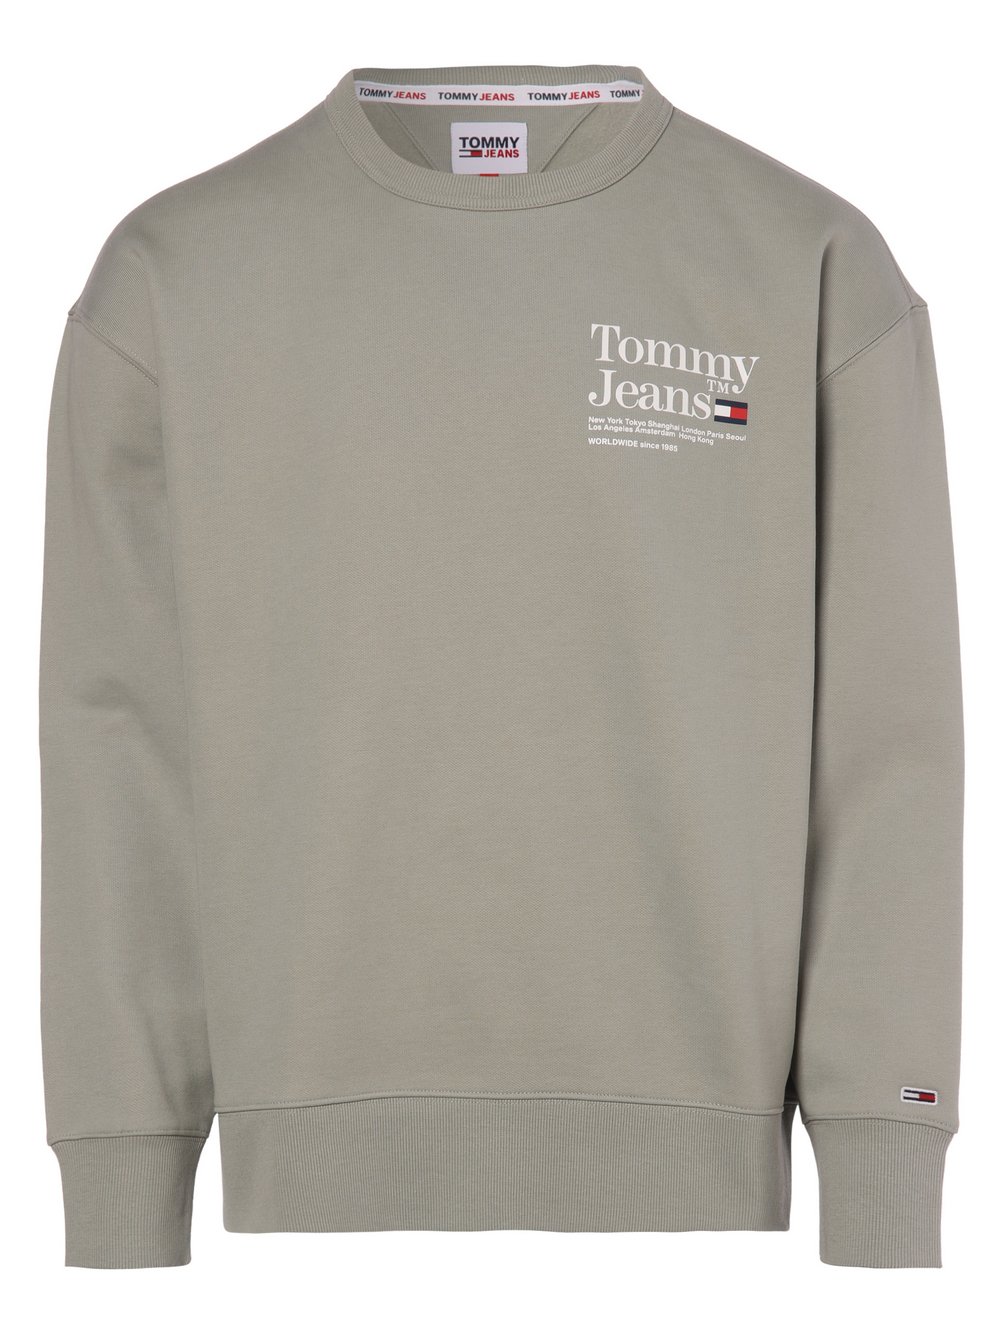 Tommy Jeans - Męska bluza nierozpinana, zielony